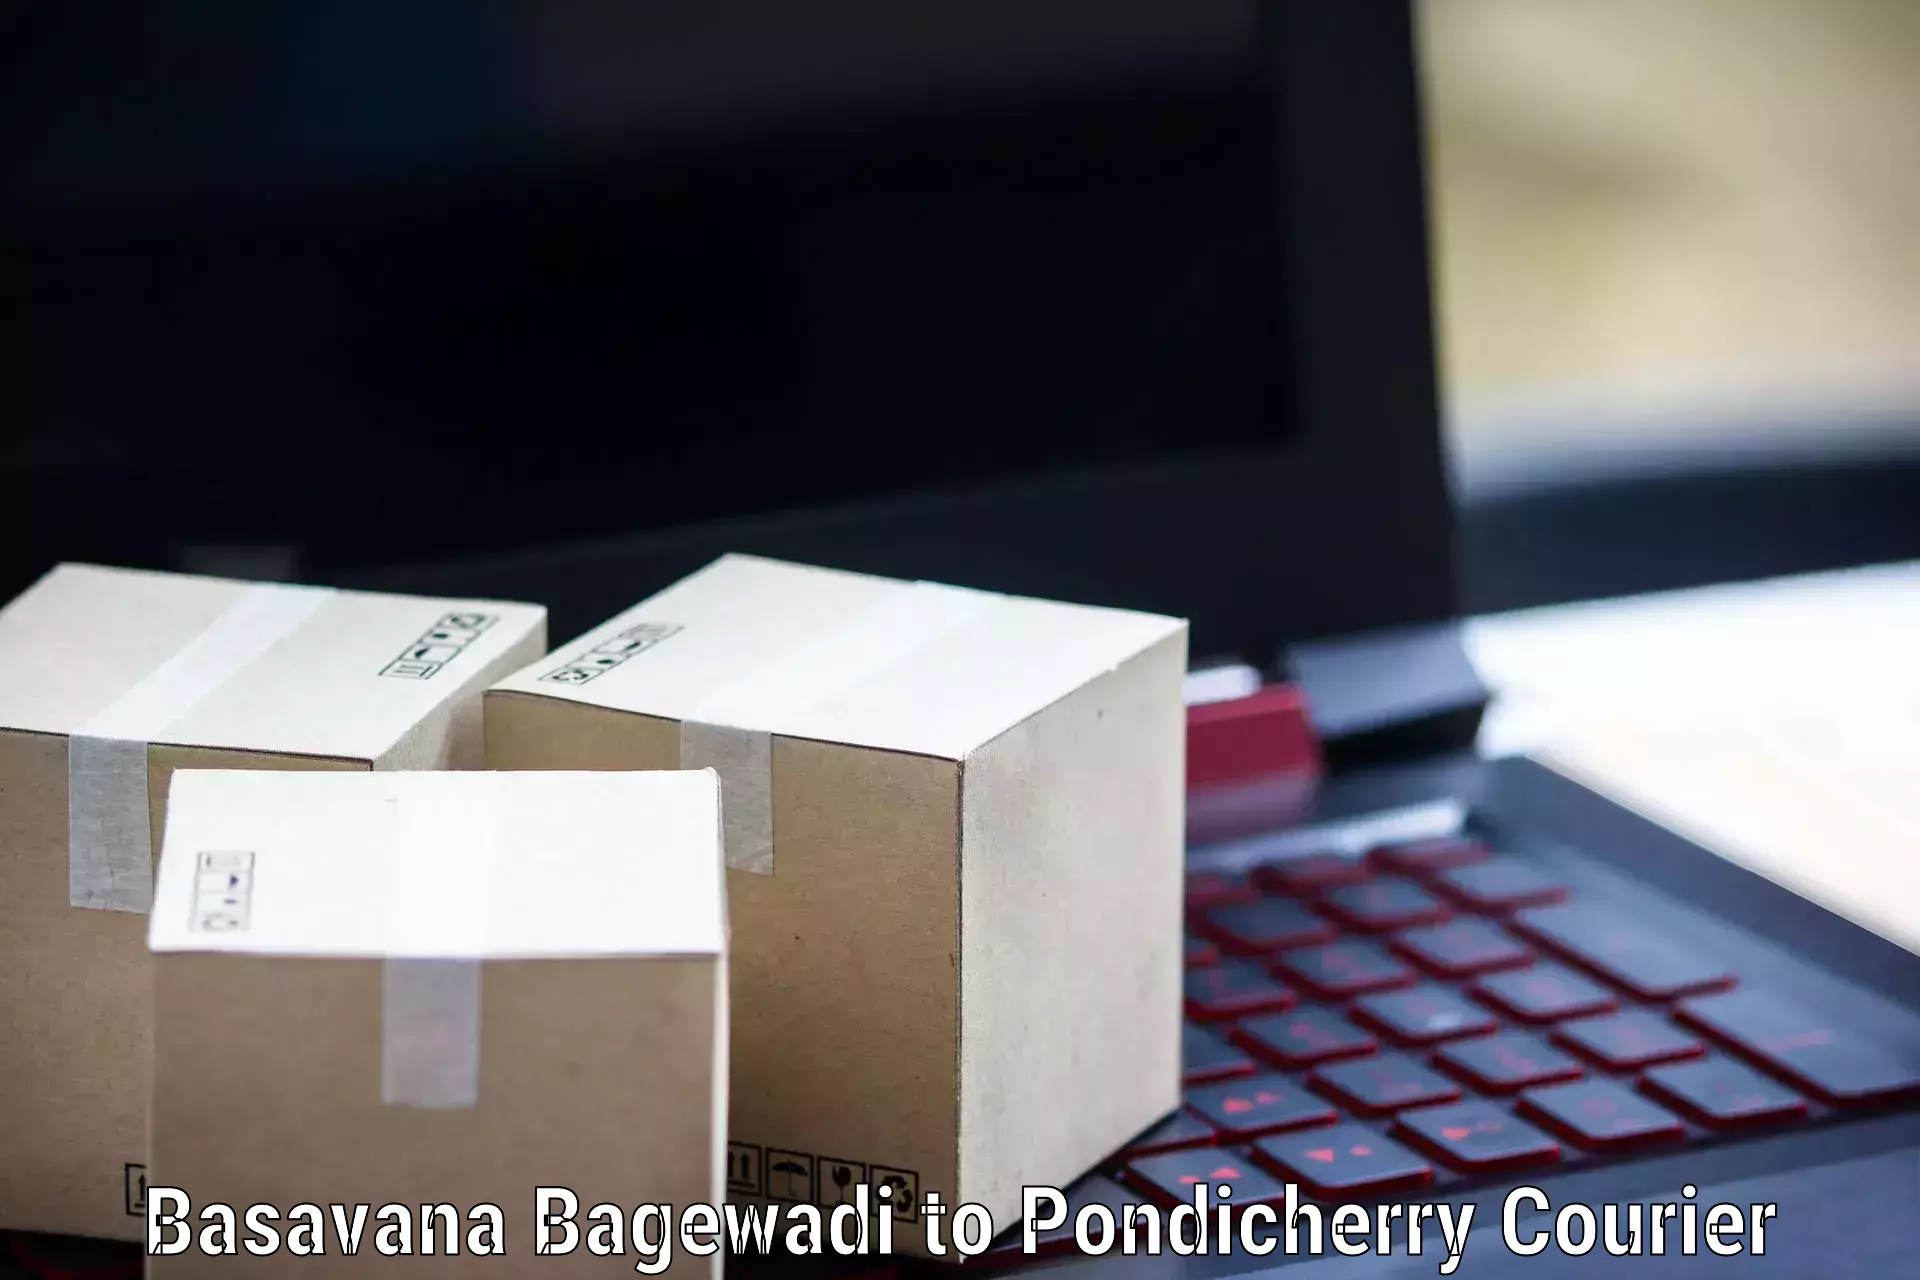 Express delivery network Basavana Bagewadi to Pondicherry